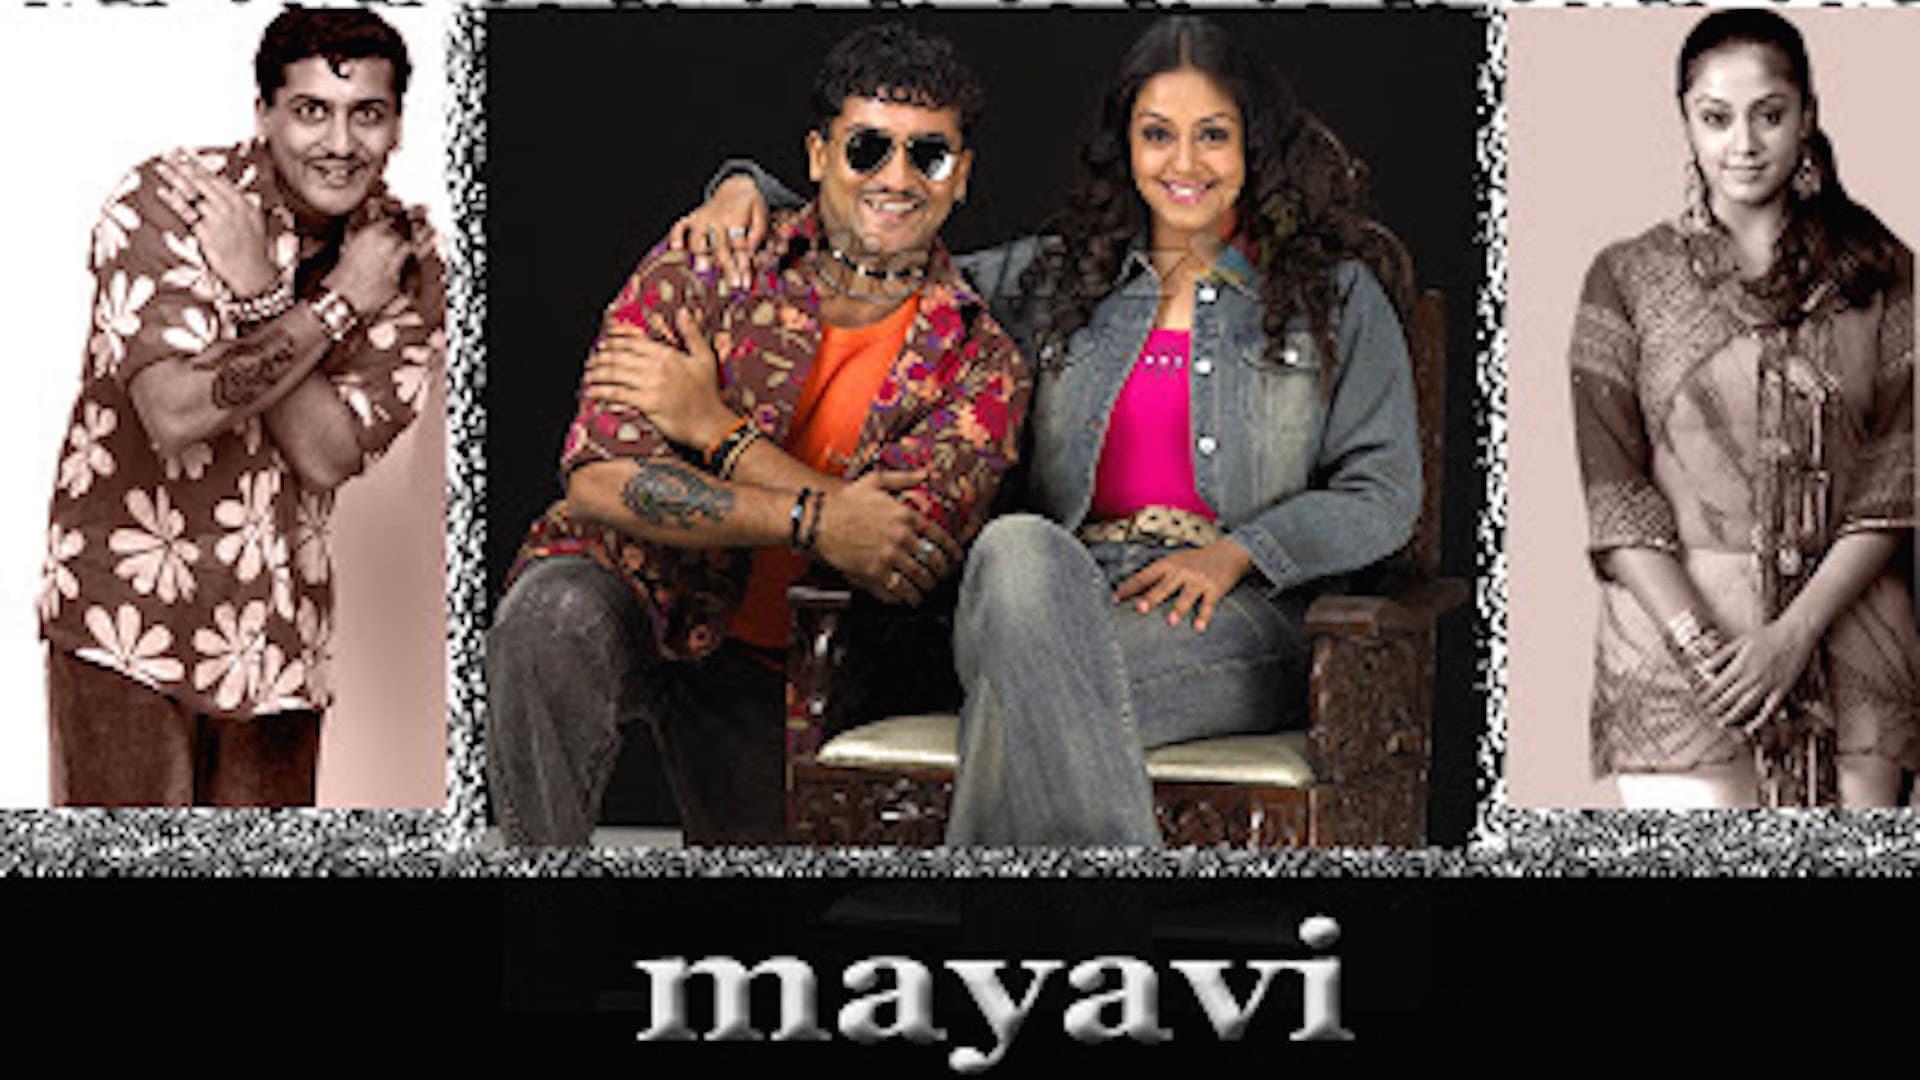 Maayavi